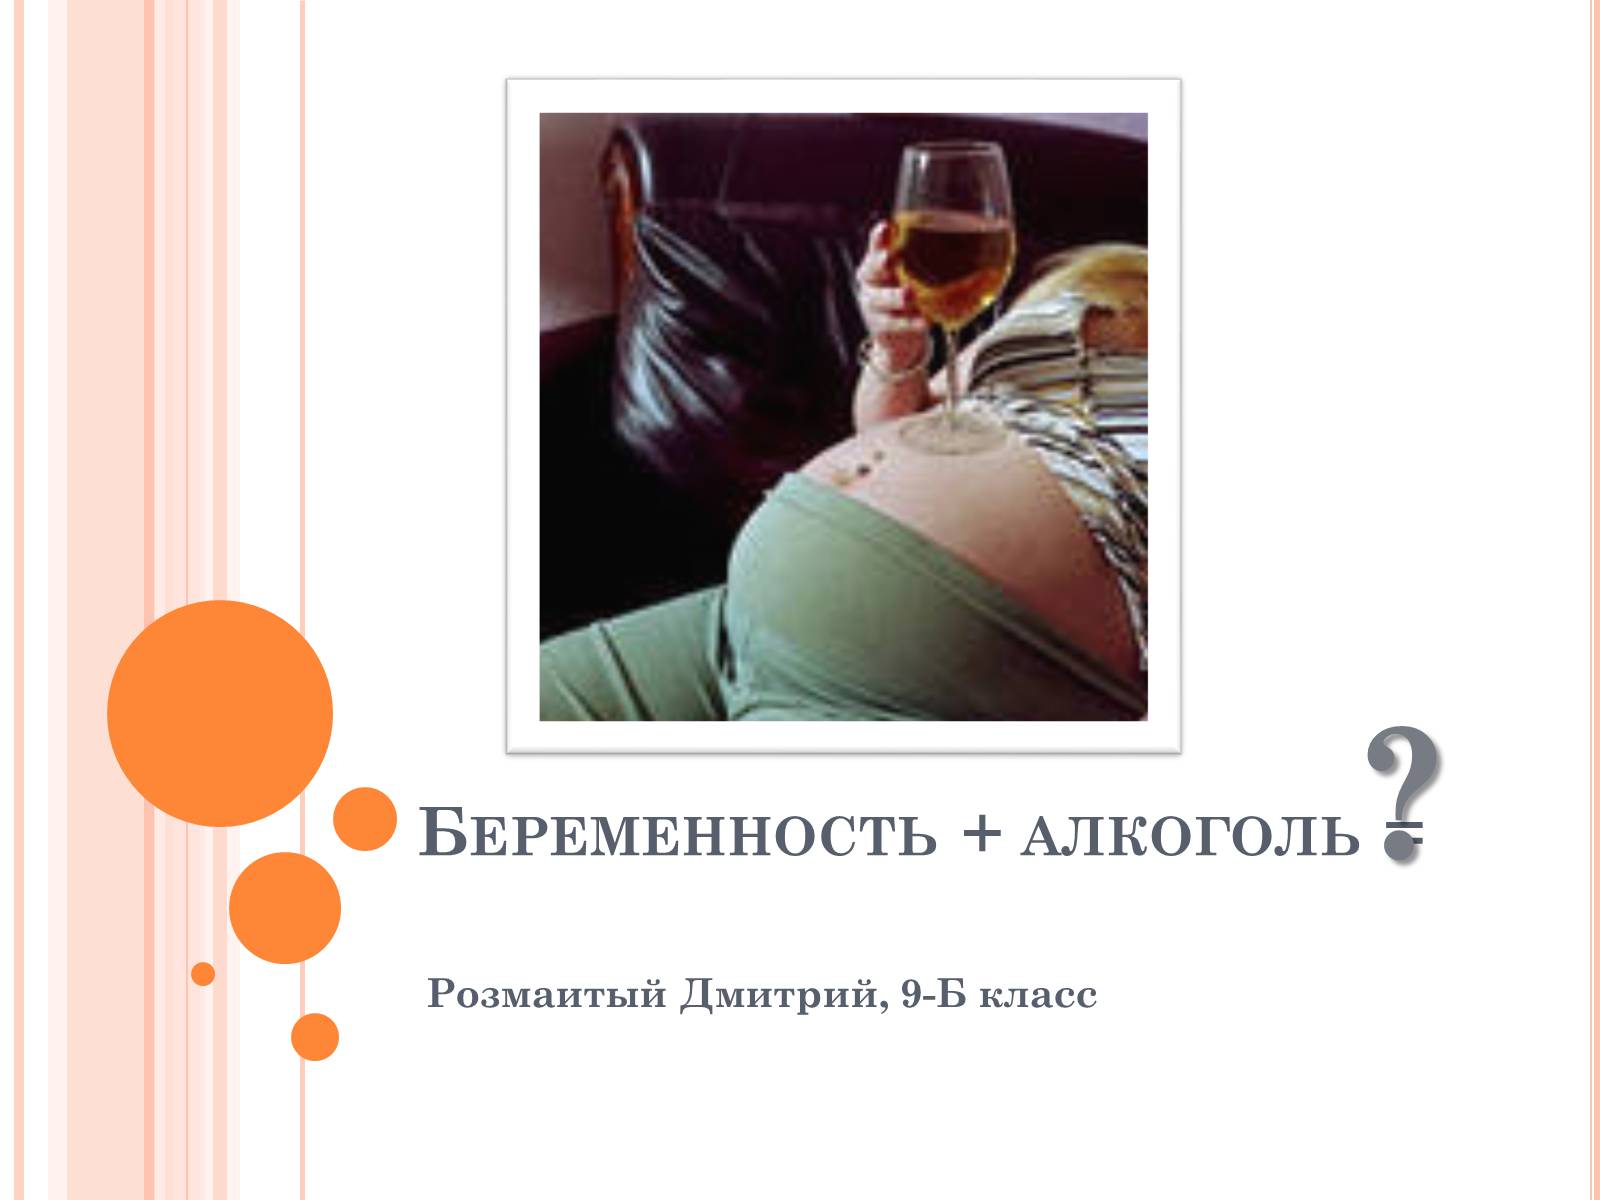 Презентація на тему «Беременность и алкоголь» - Слайд #1